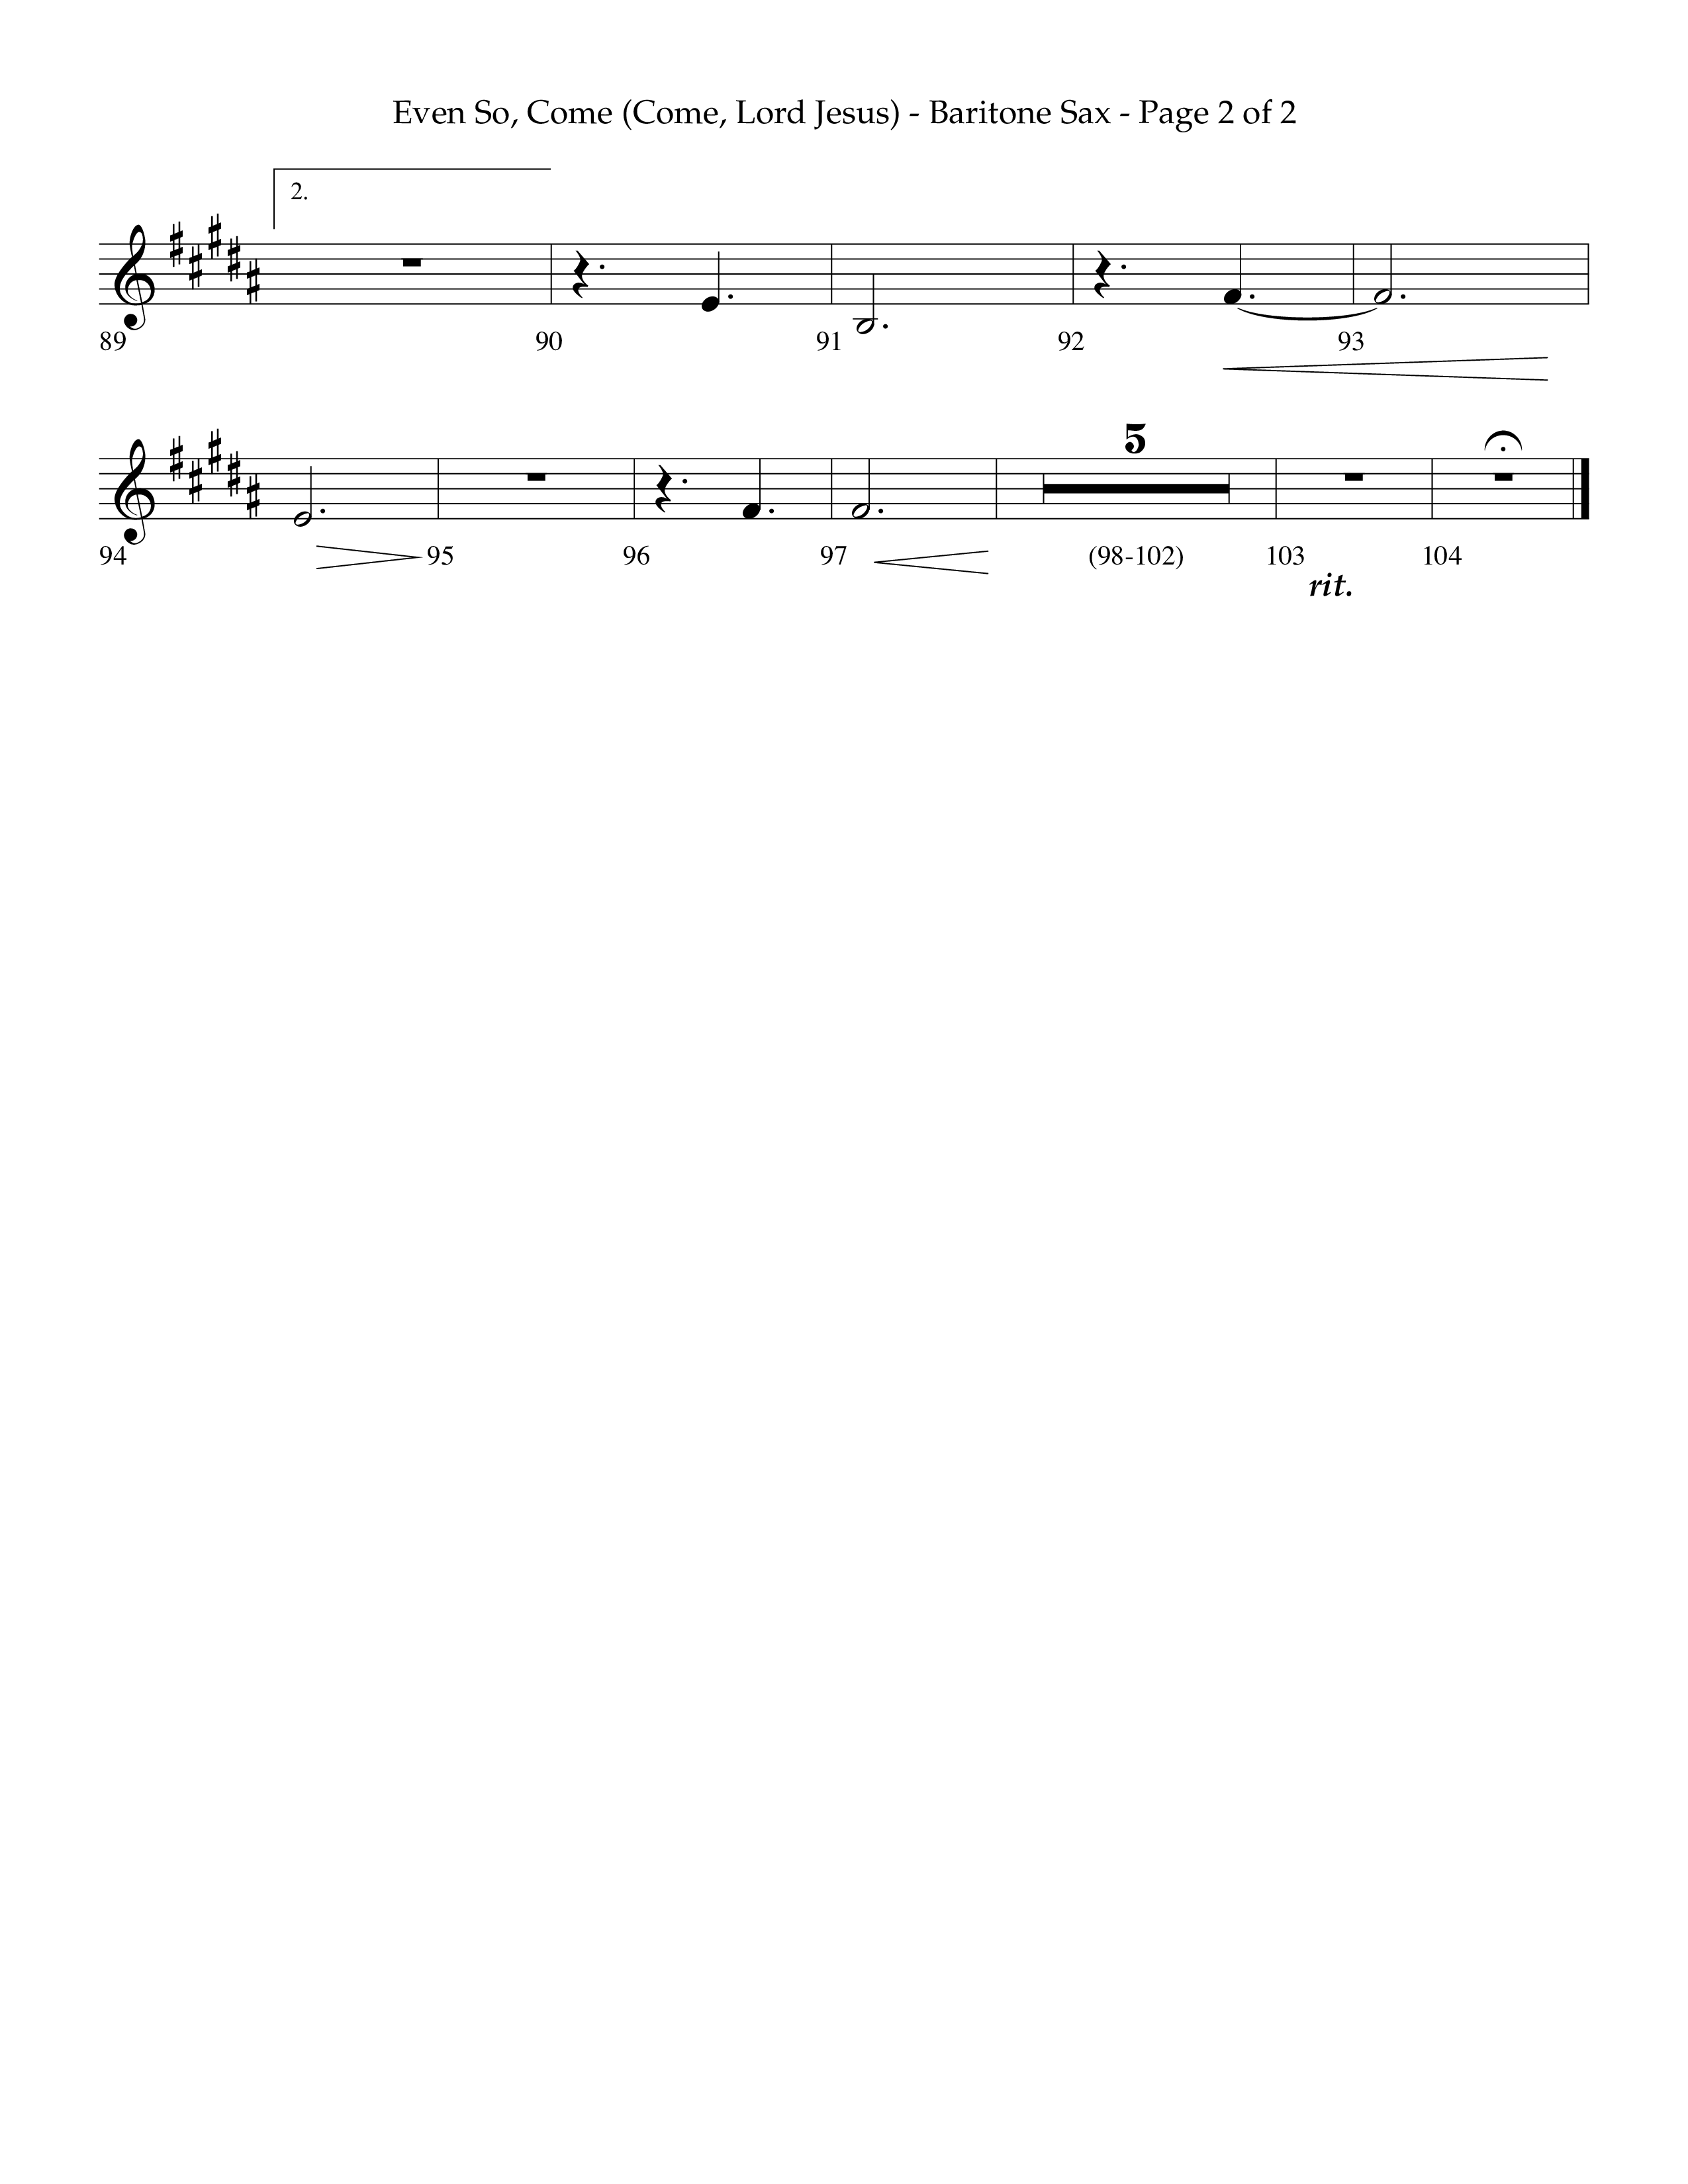 Even So Come (Choral Anthem SATB) Bari Sax (Lifeway Choral / Arr. Camp Kirkland)